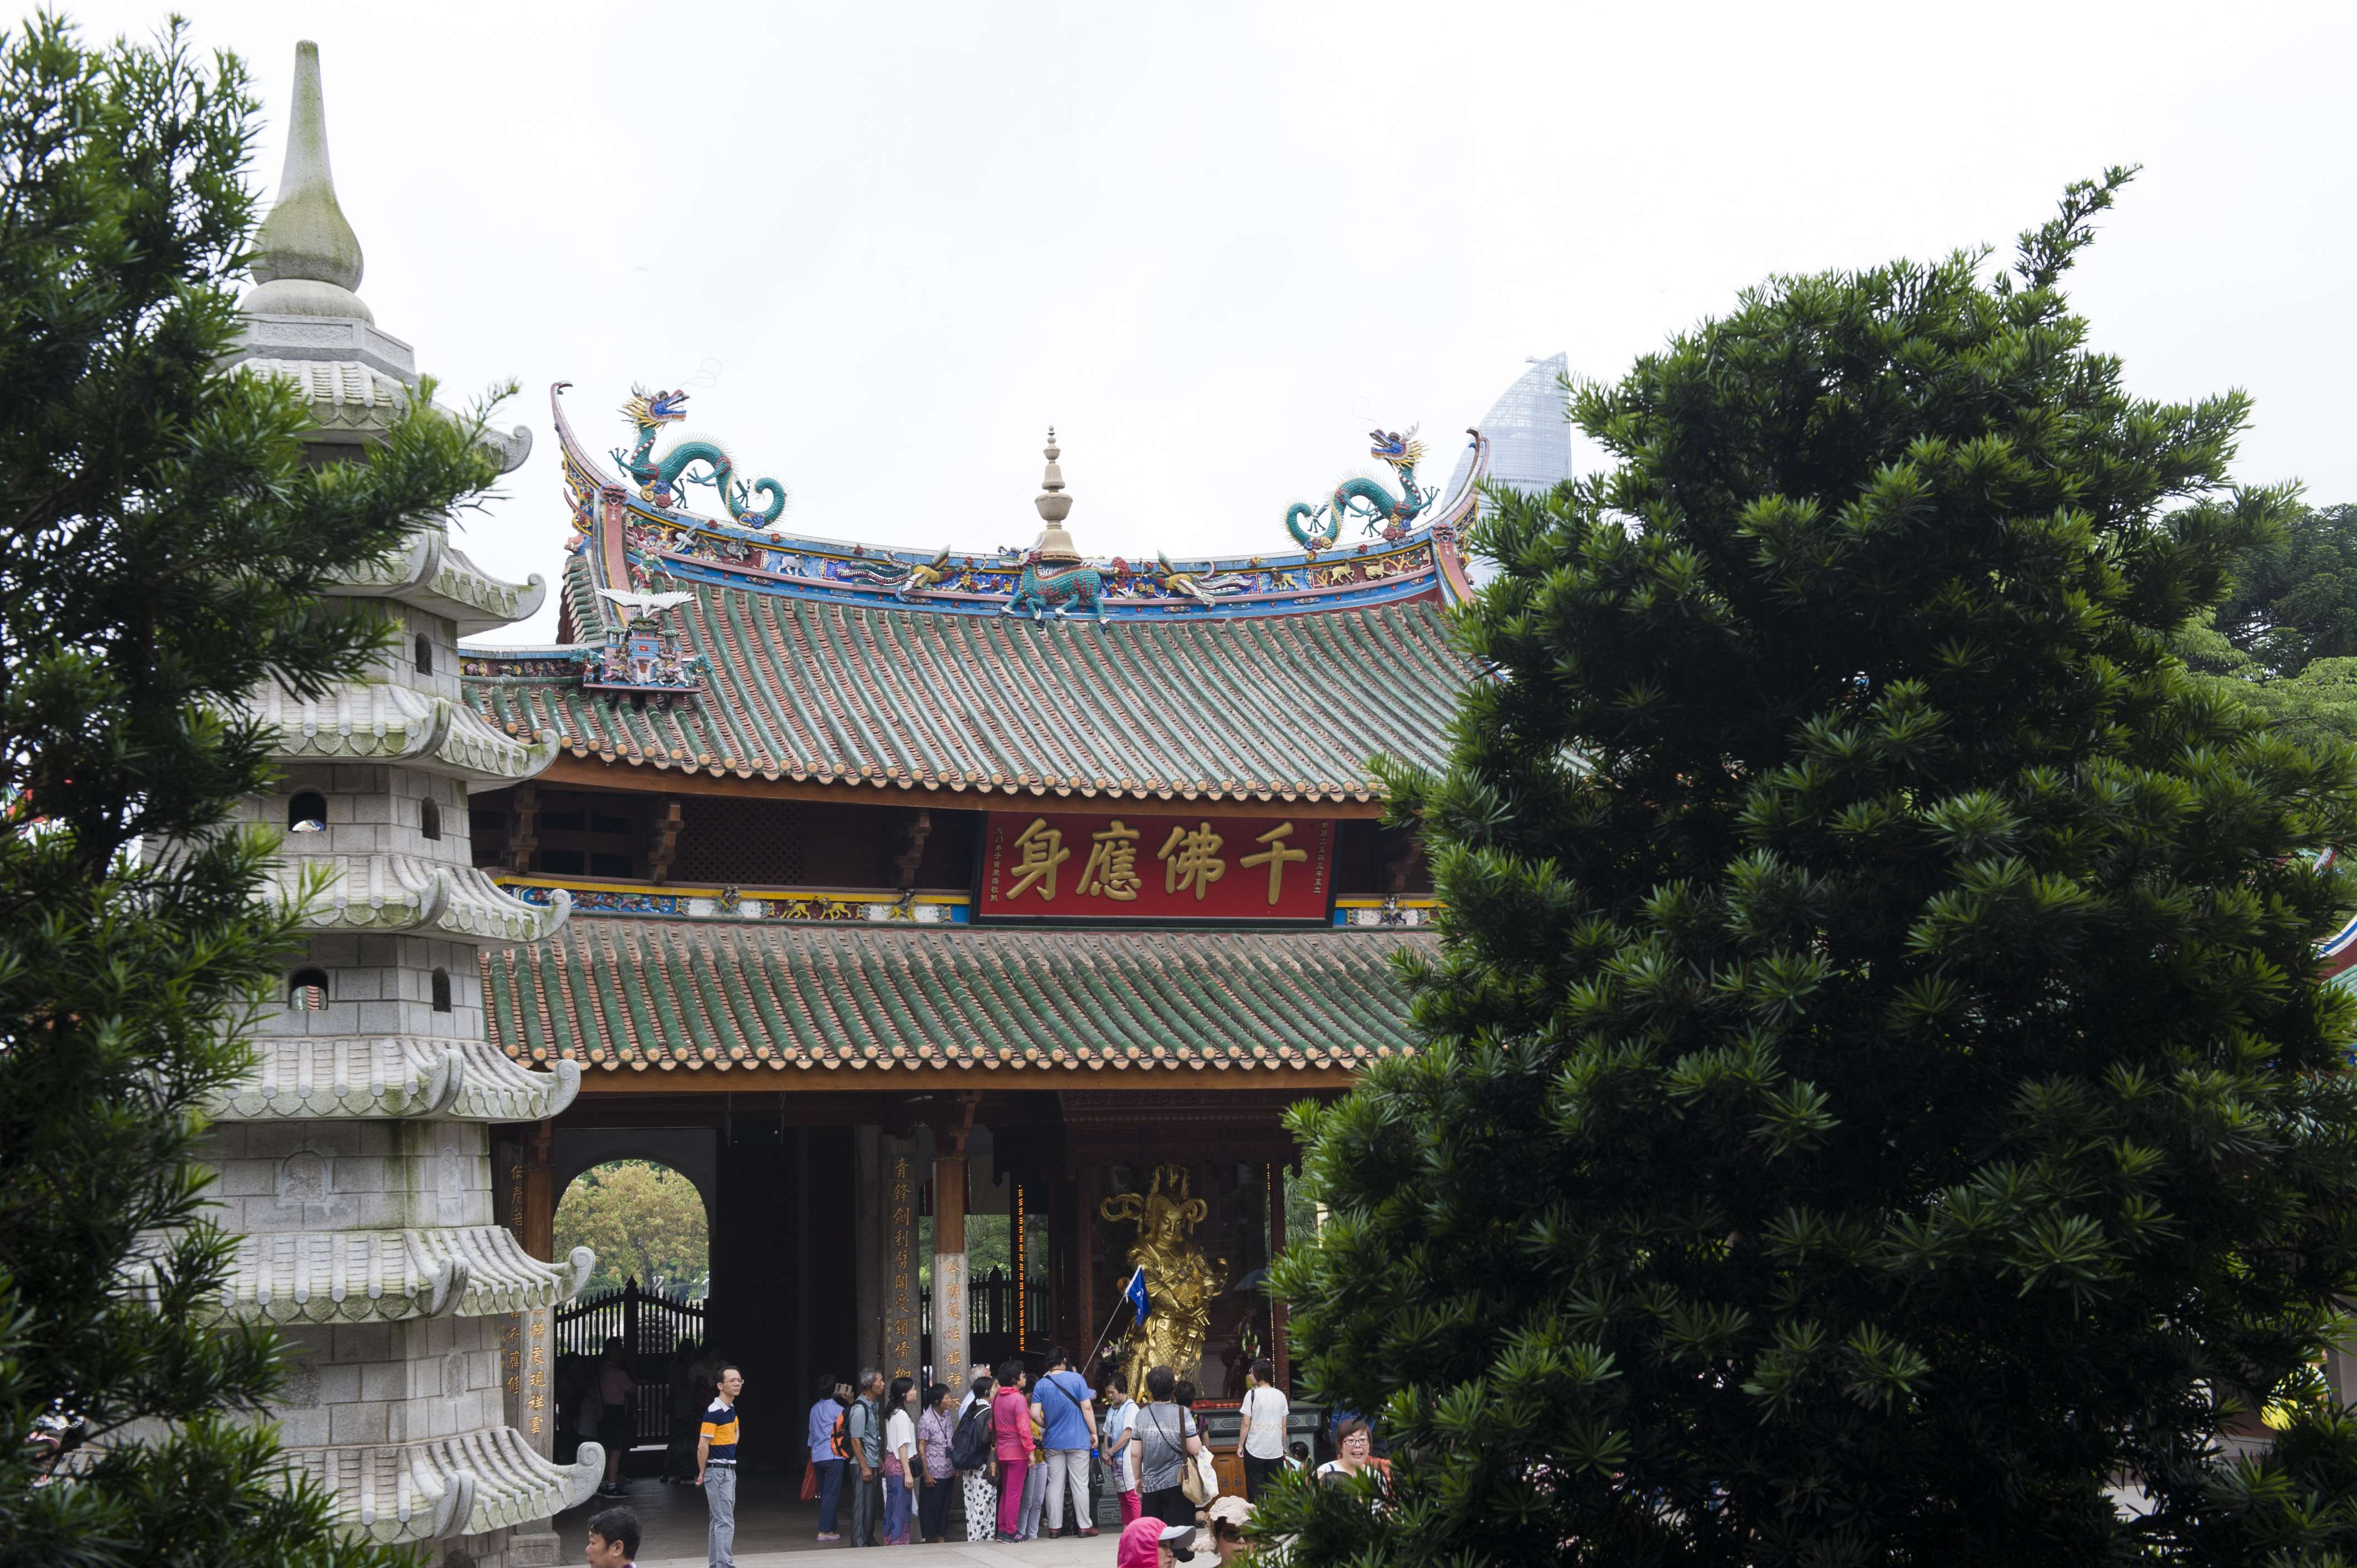 Nanputuo Temple dates back more than 1,500 years. Photo: ImagineChina